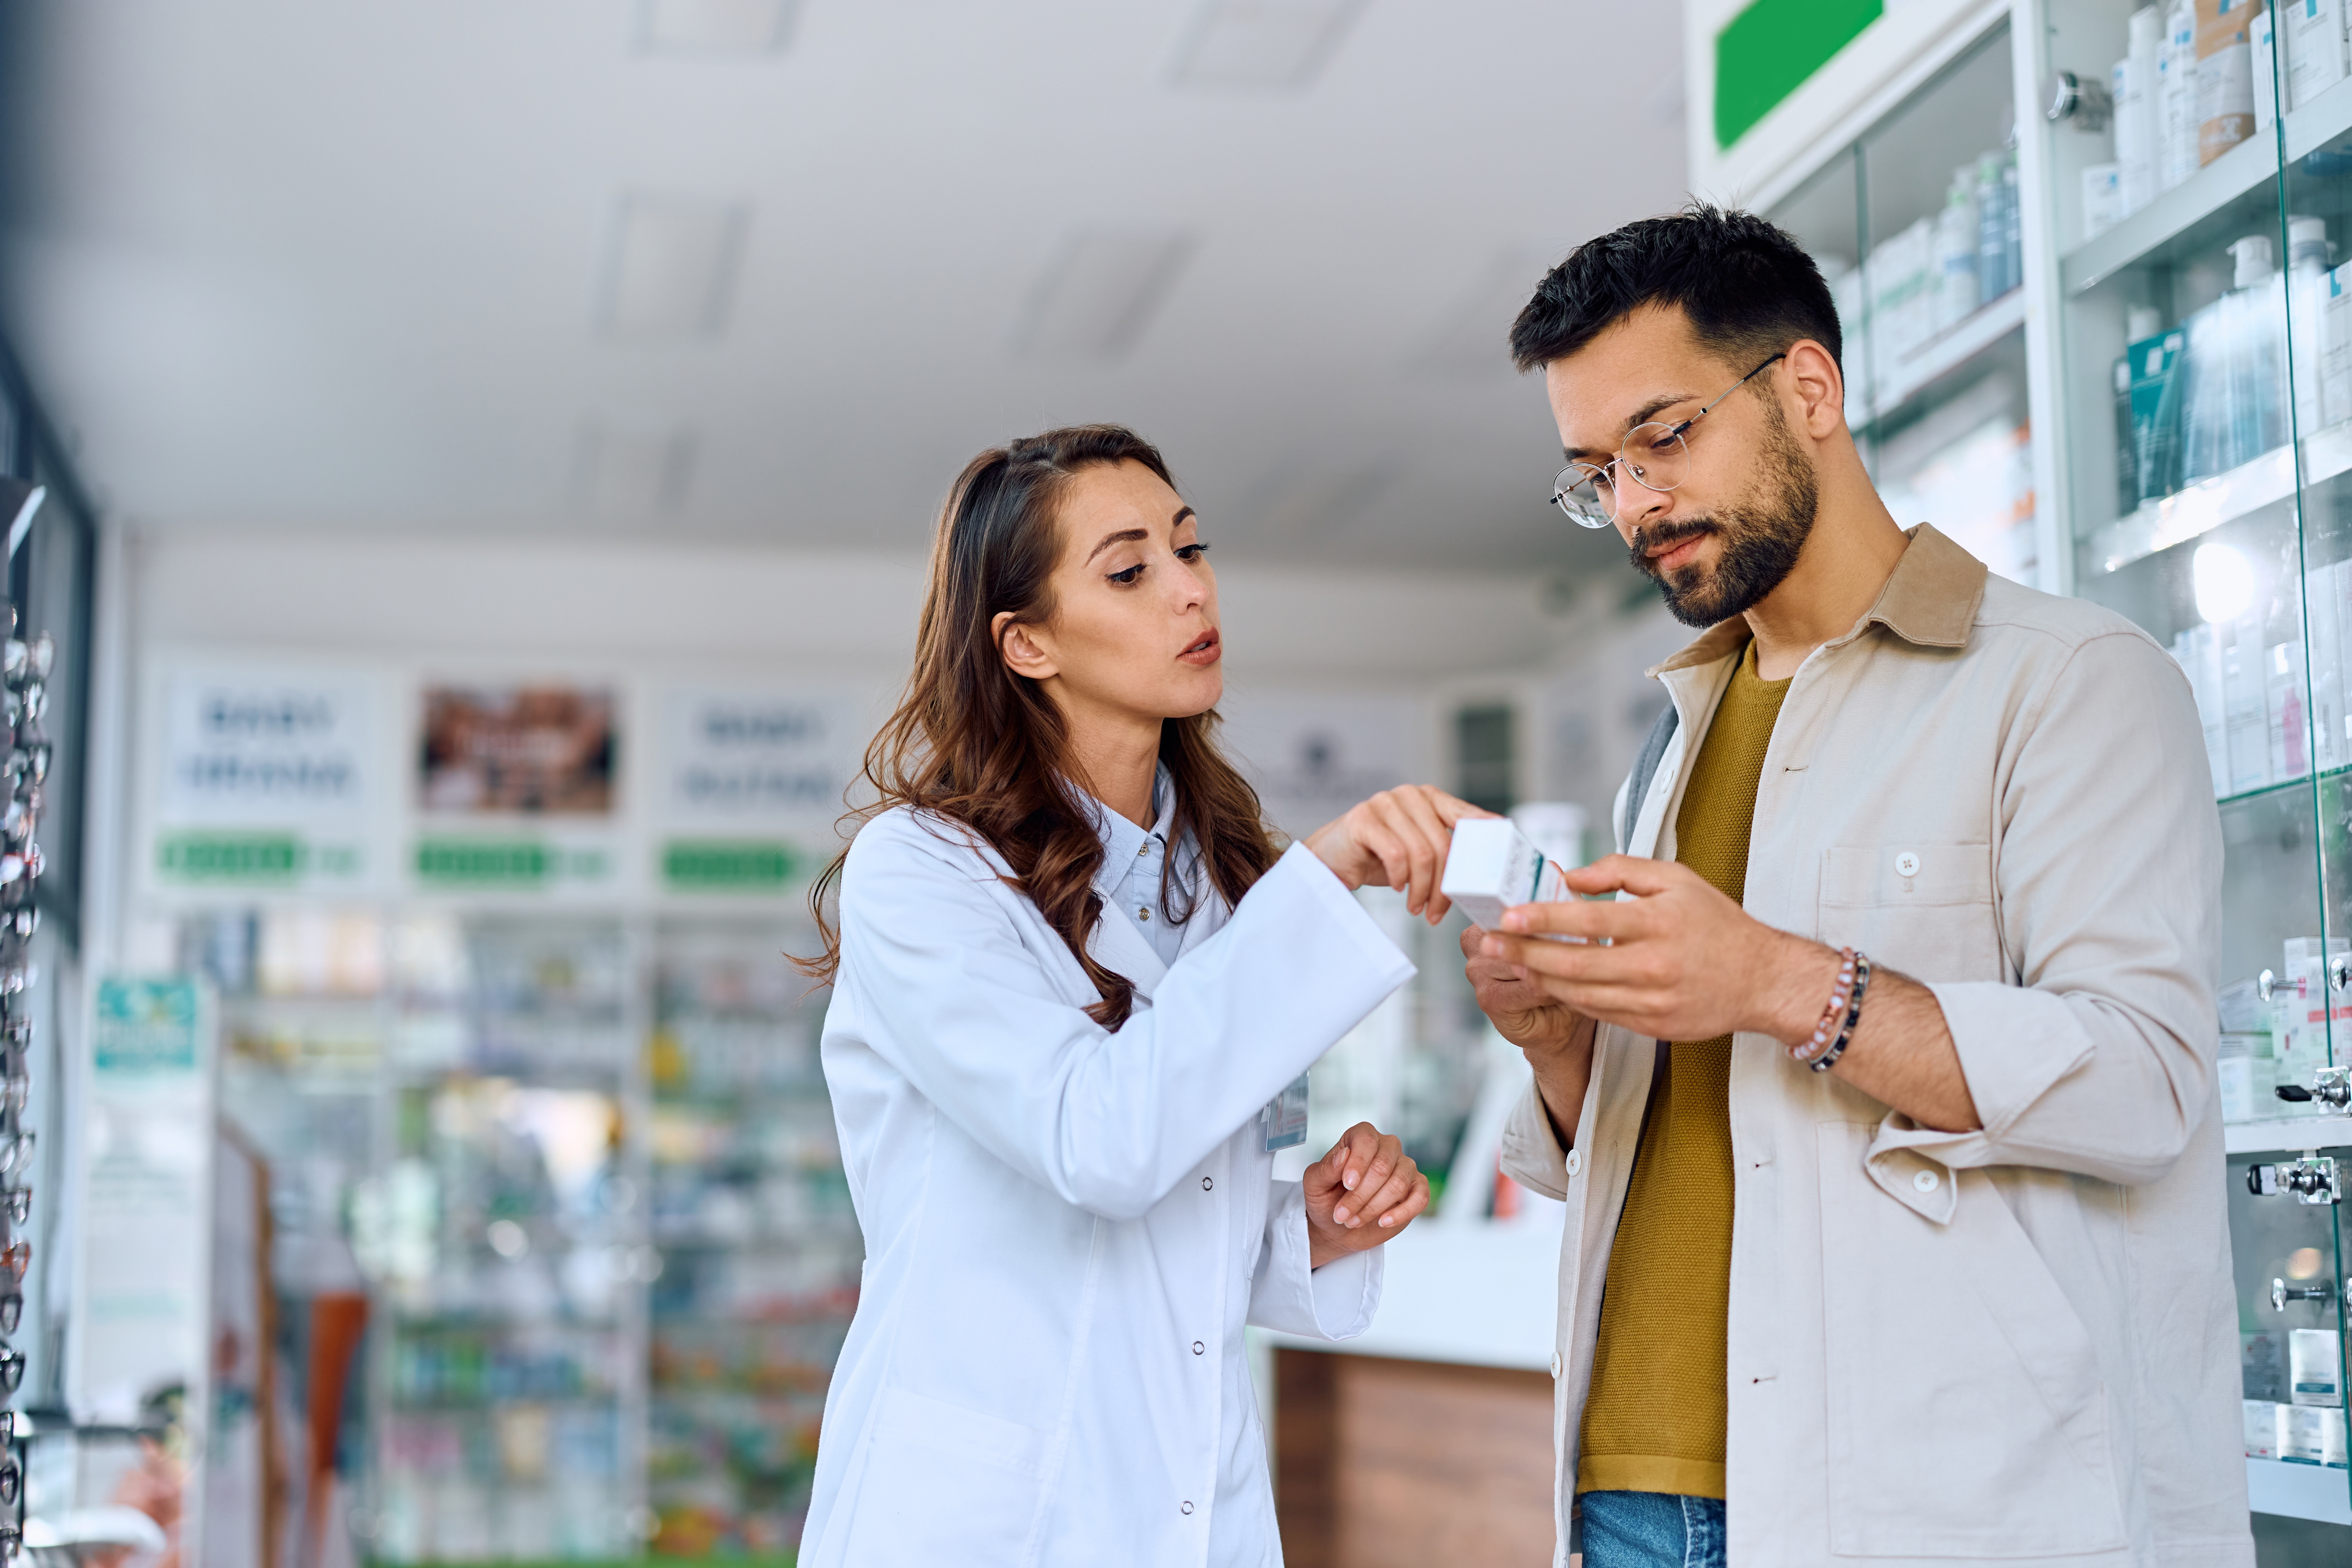 Un homme dans une pharmacie | Source : Shutterstock